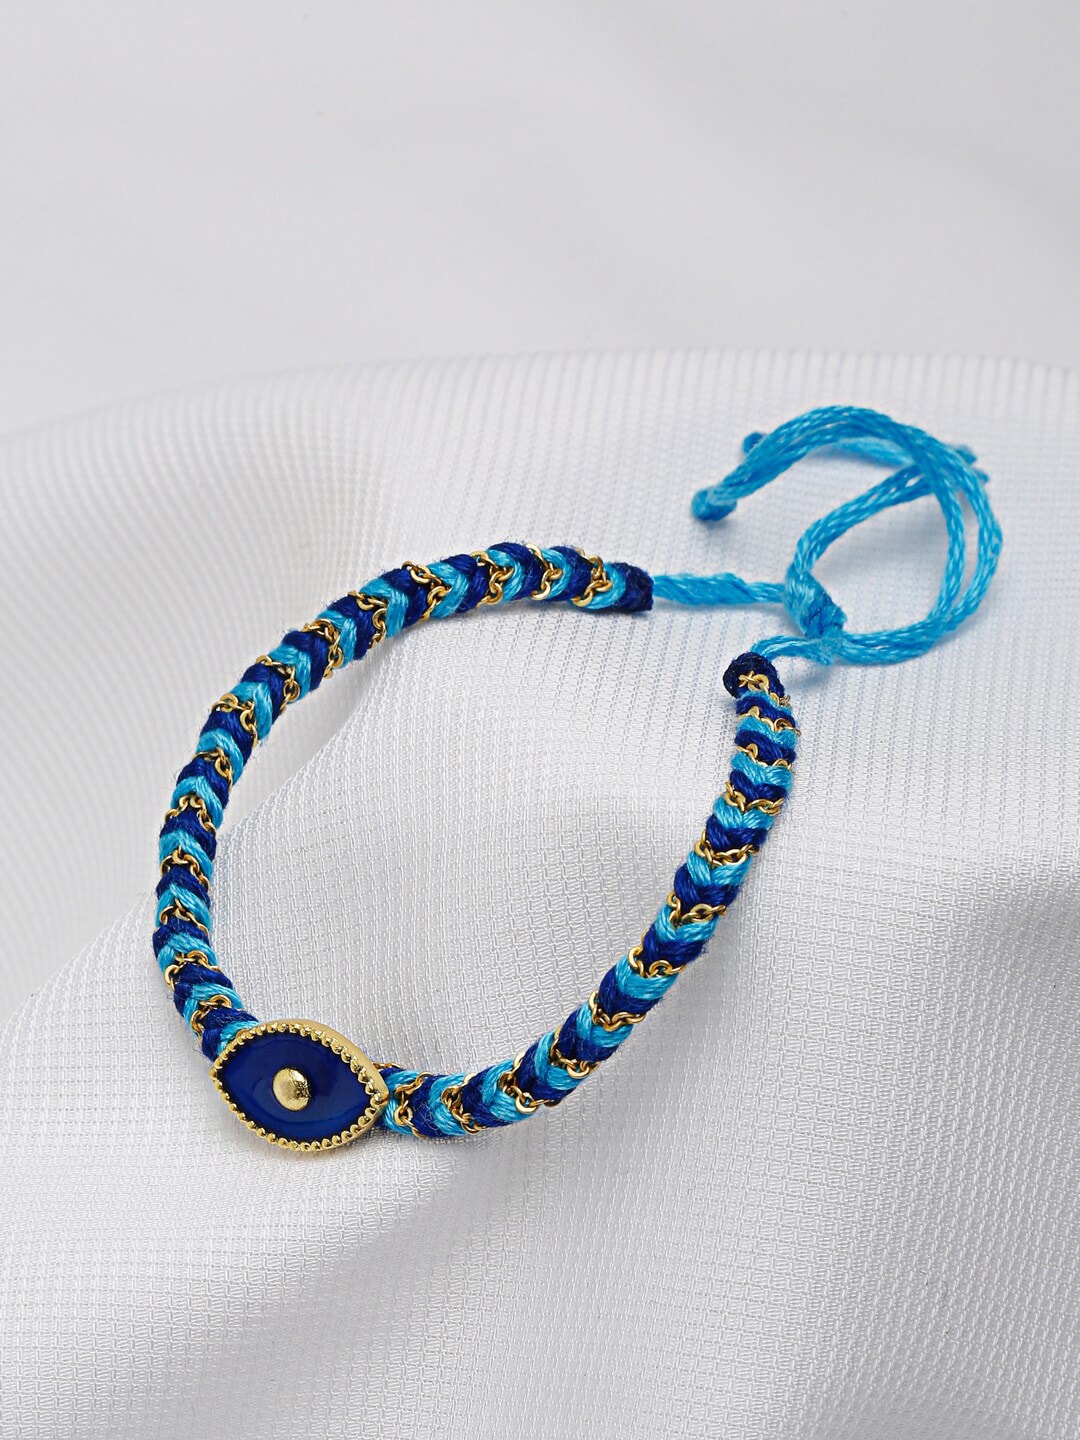 EK BY EKTA KAPOOR Women Blue & Gold-Toned Evil Eye Charm With Enamel Wraparound Bracelet Price in India